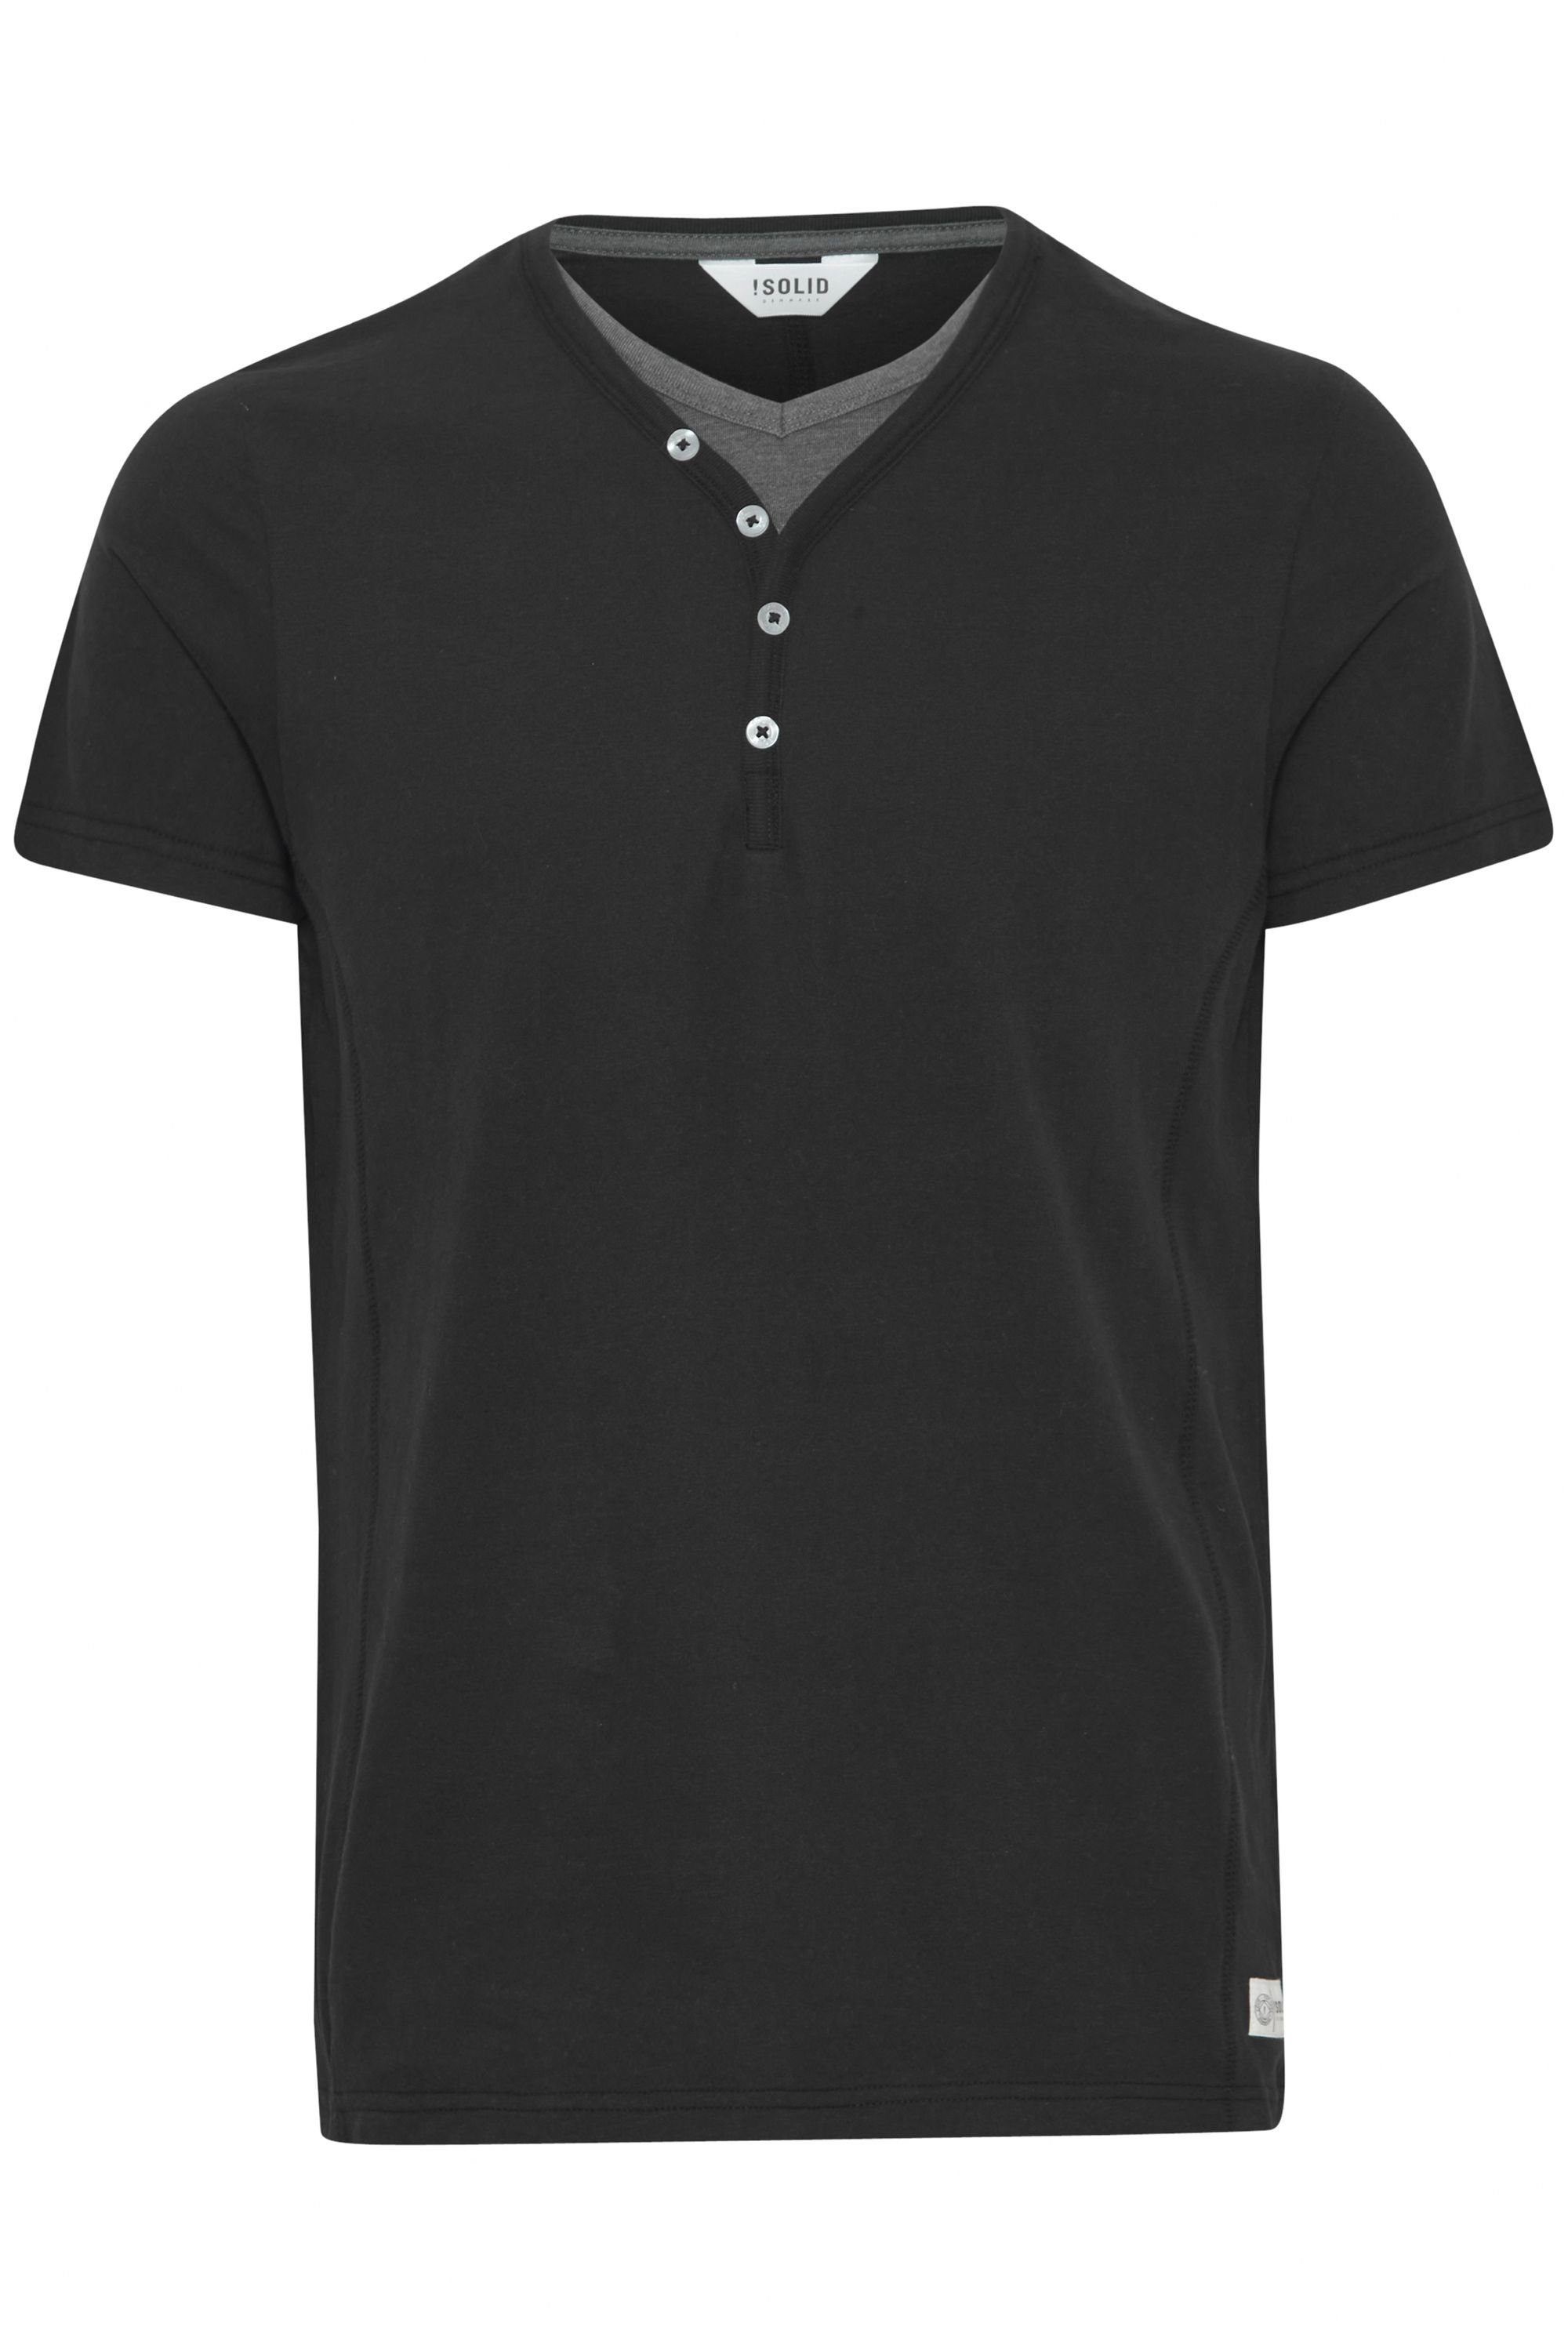 2-in-1 (9000) !Solid Black im Look SDDorian Layershirt Kurzarmshirt